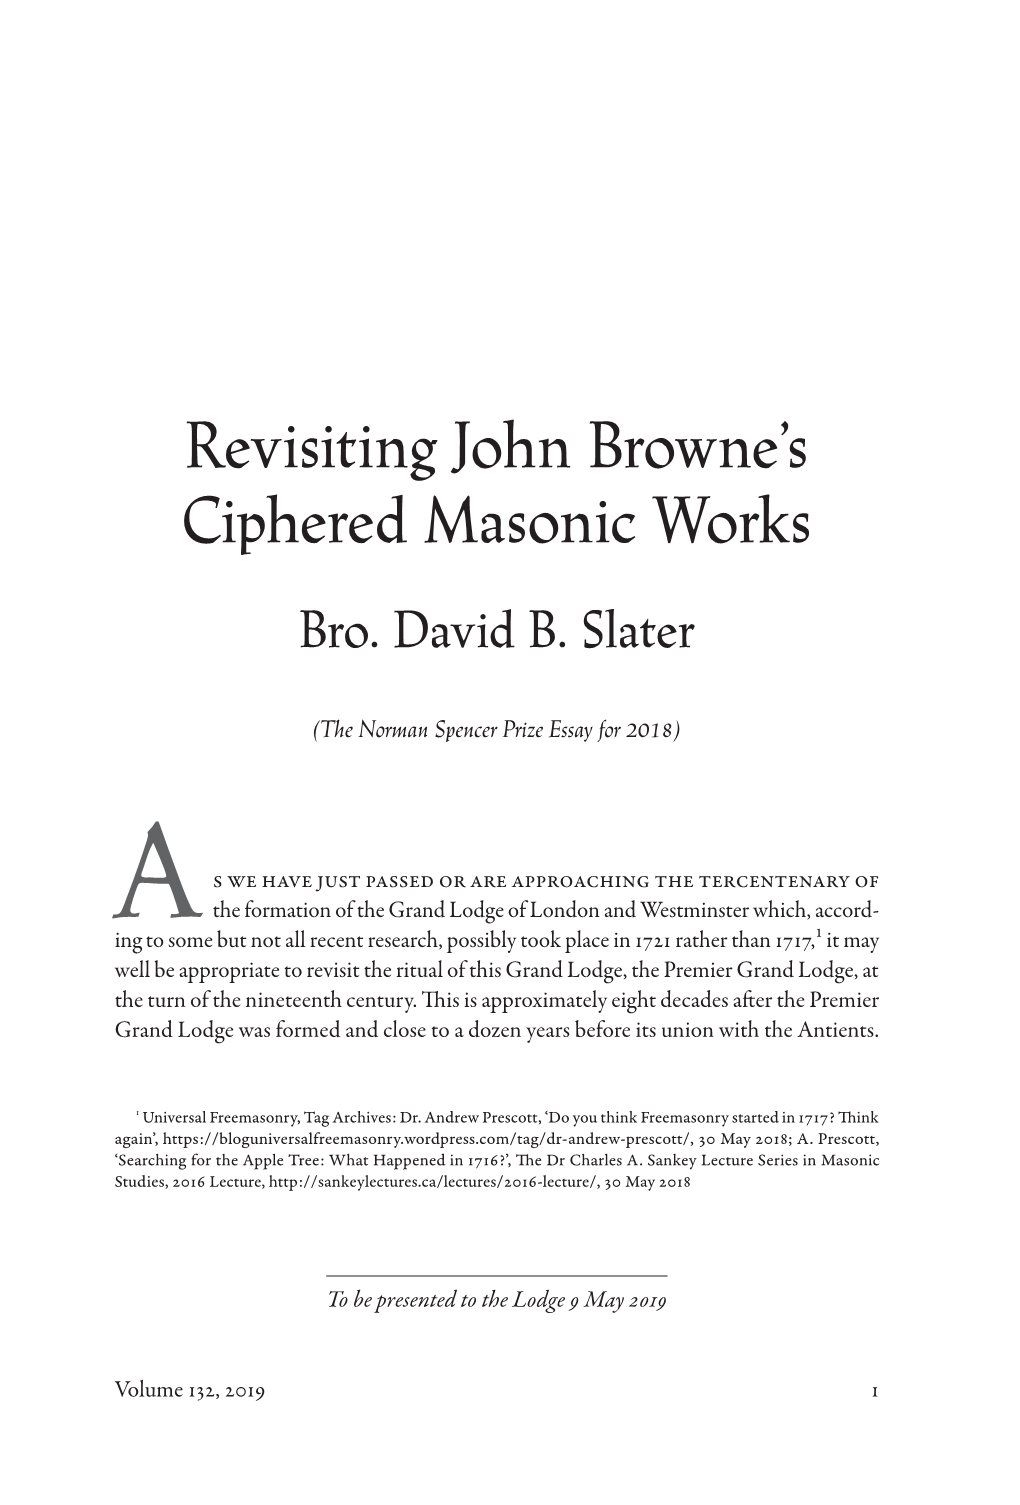 Revisiting John Browne's Ciphered Masonic Works